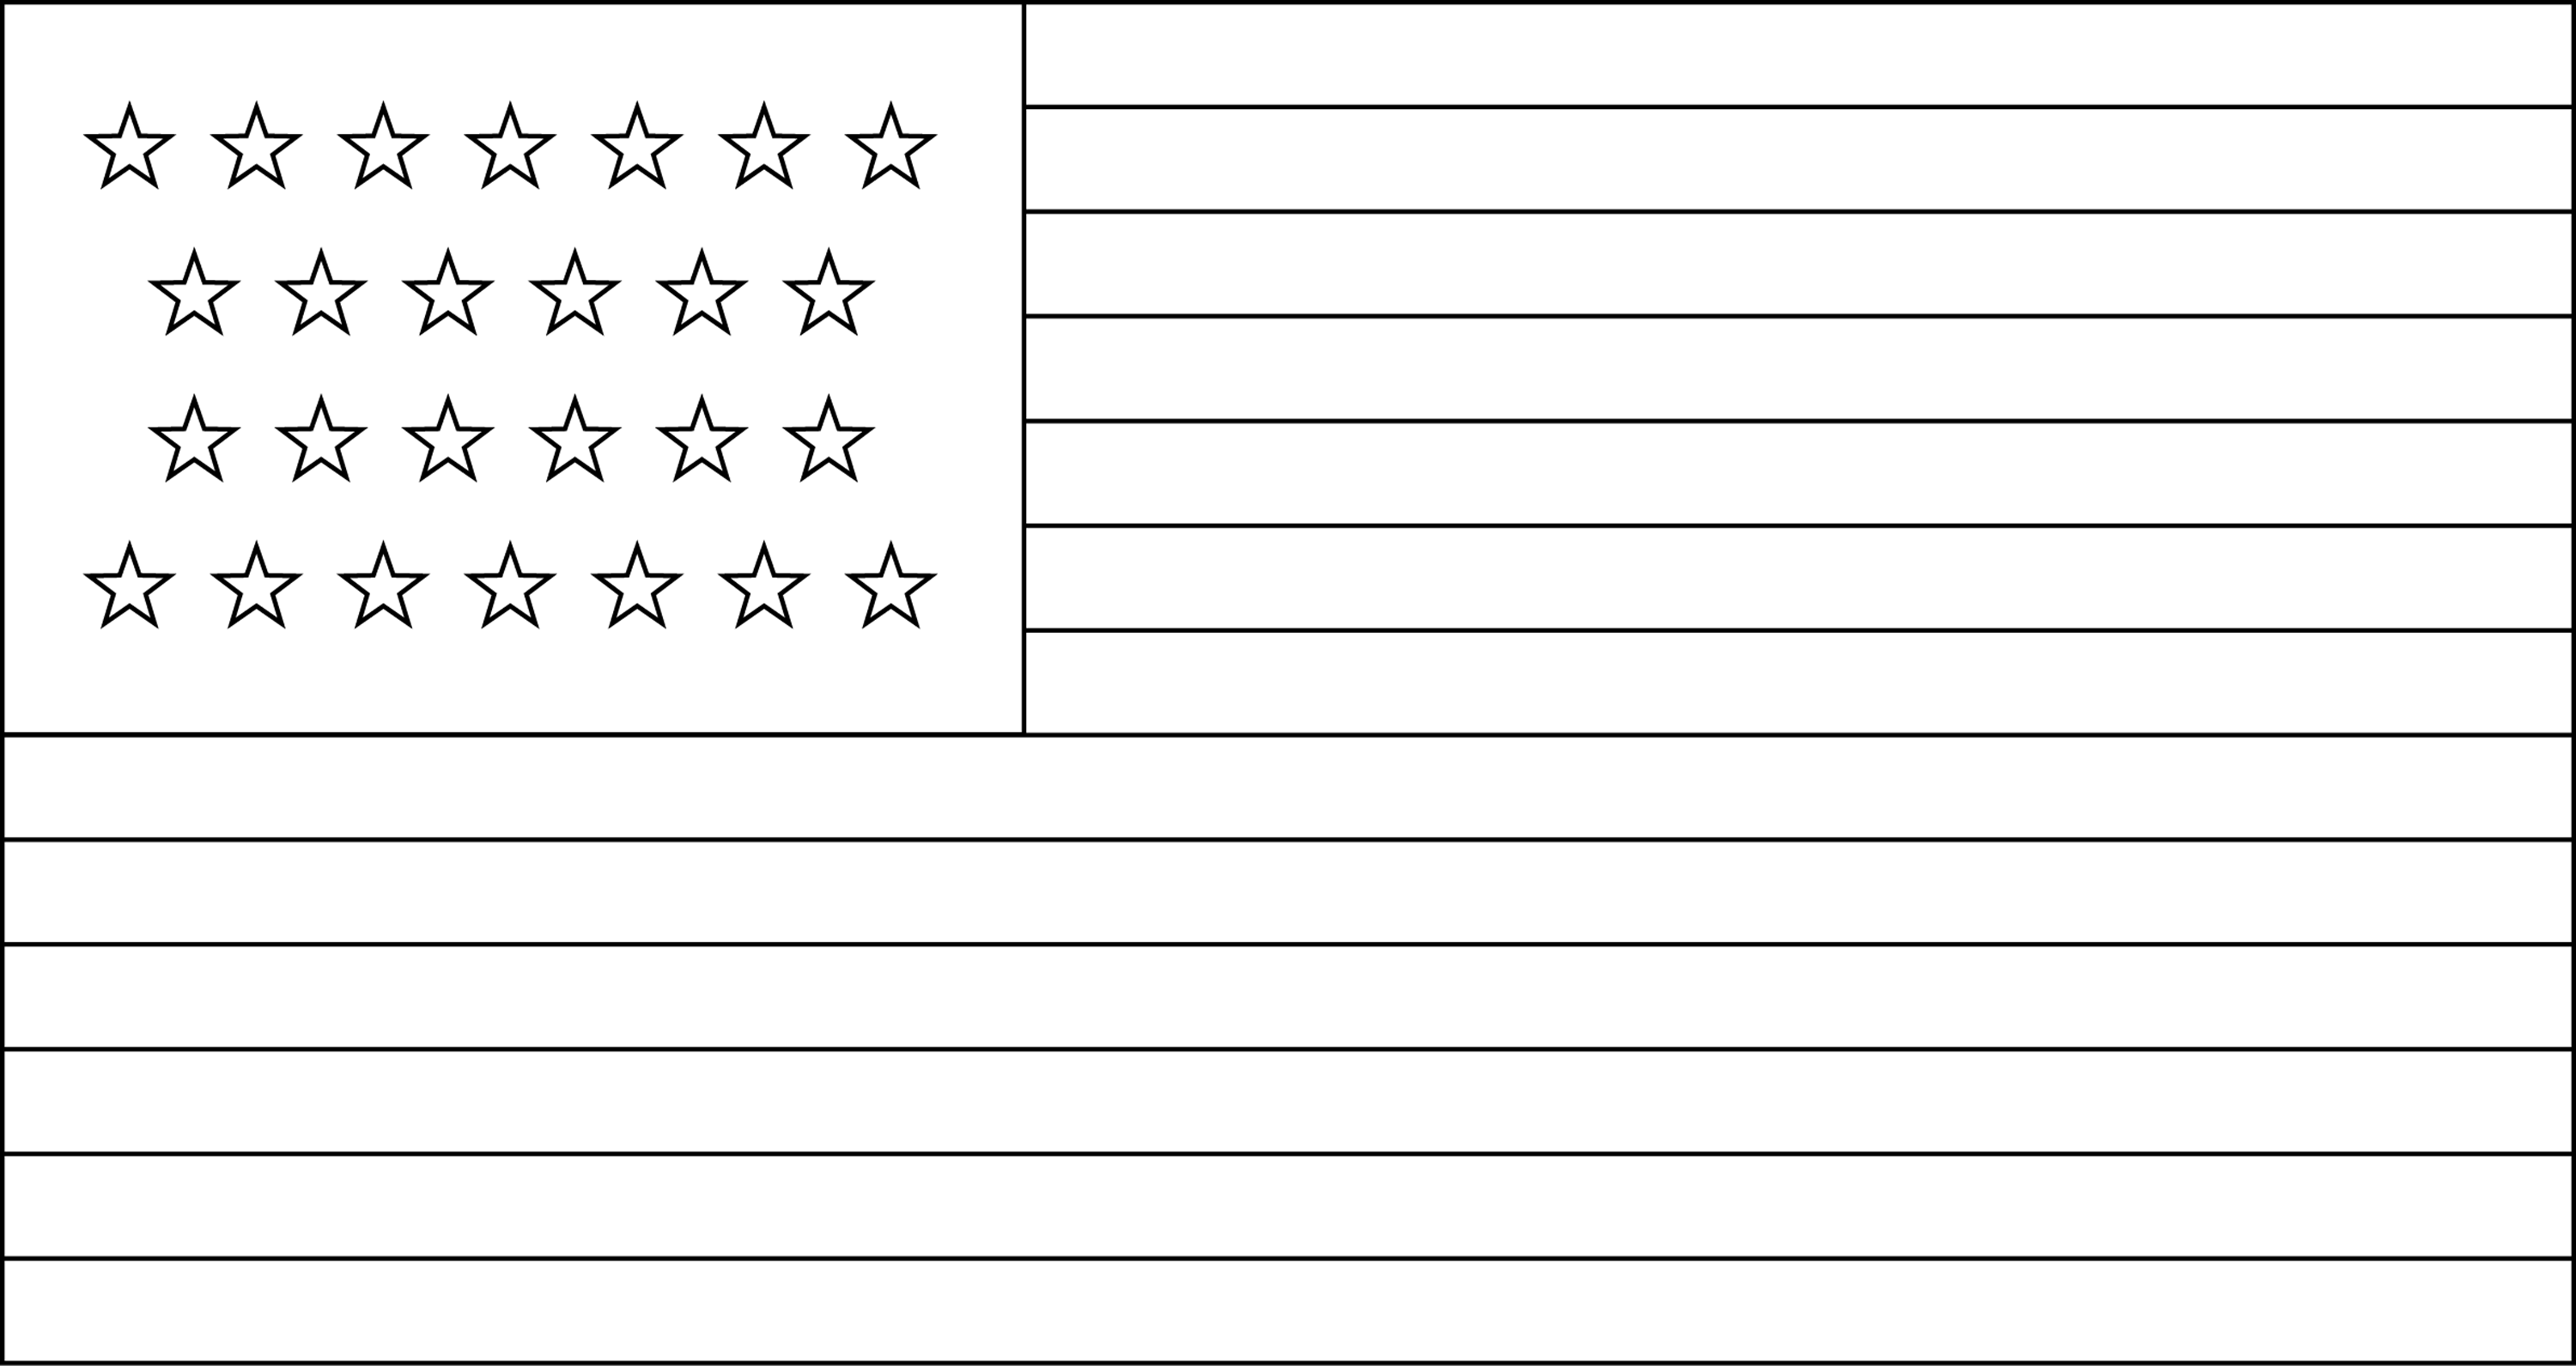 26 Star United States Flag, 1837 | ClipArt ETC